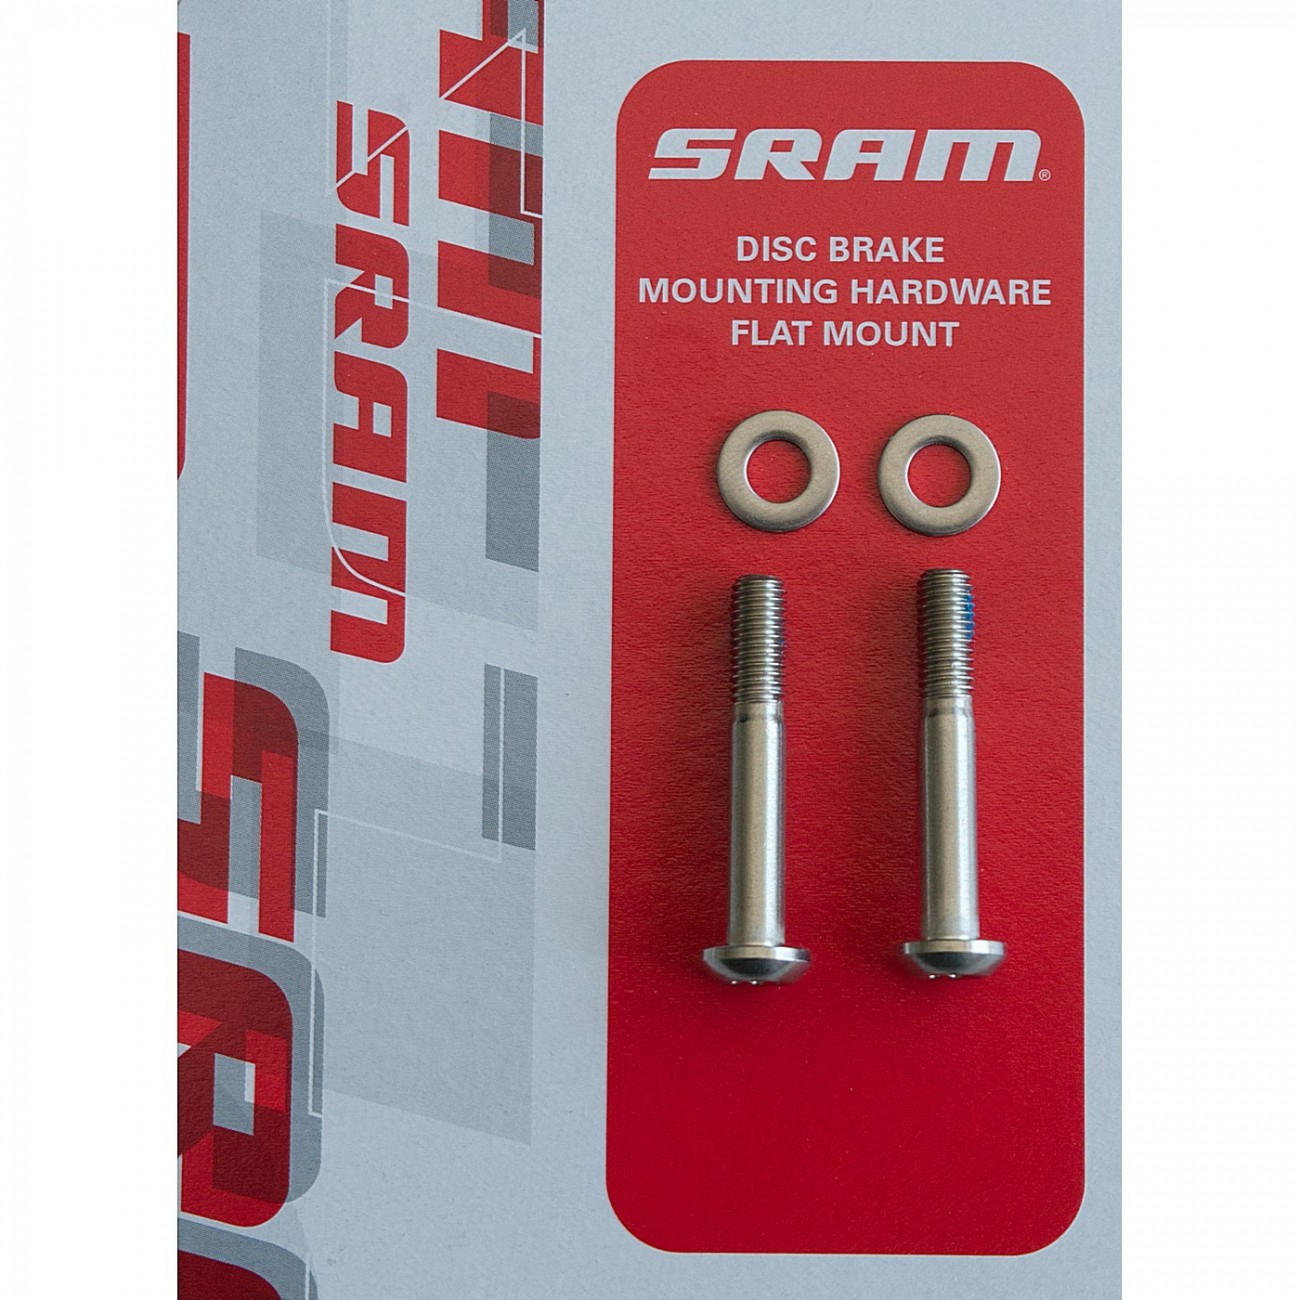 Bracket mounting bolts - stainless t25 27mm (2 pcs) - flat mount caliper - 1